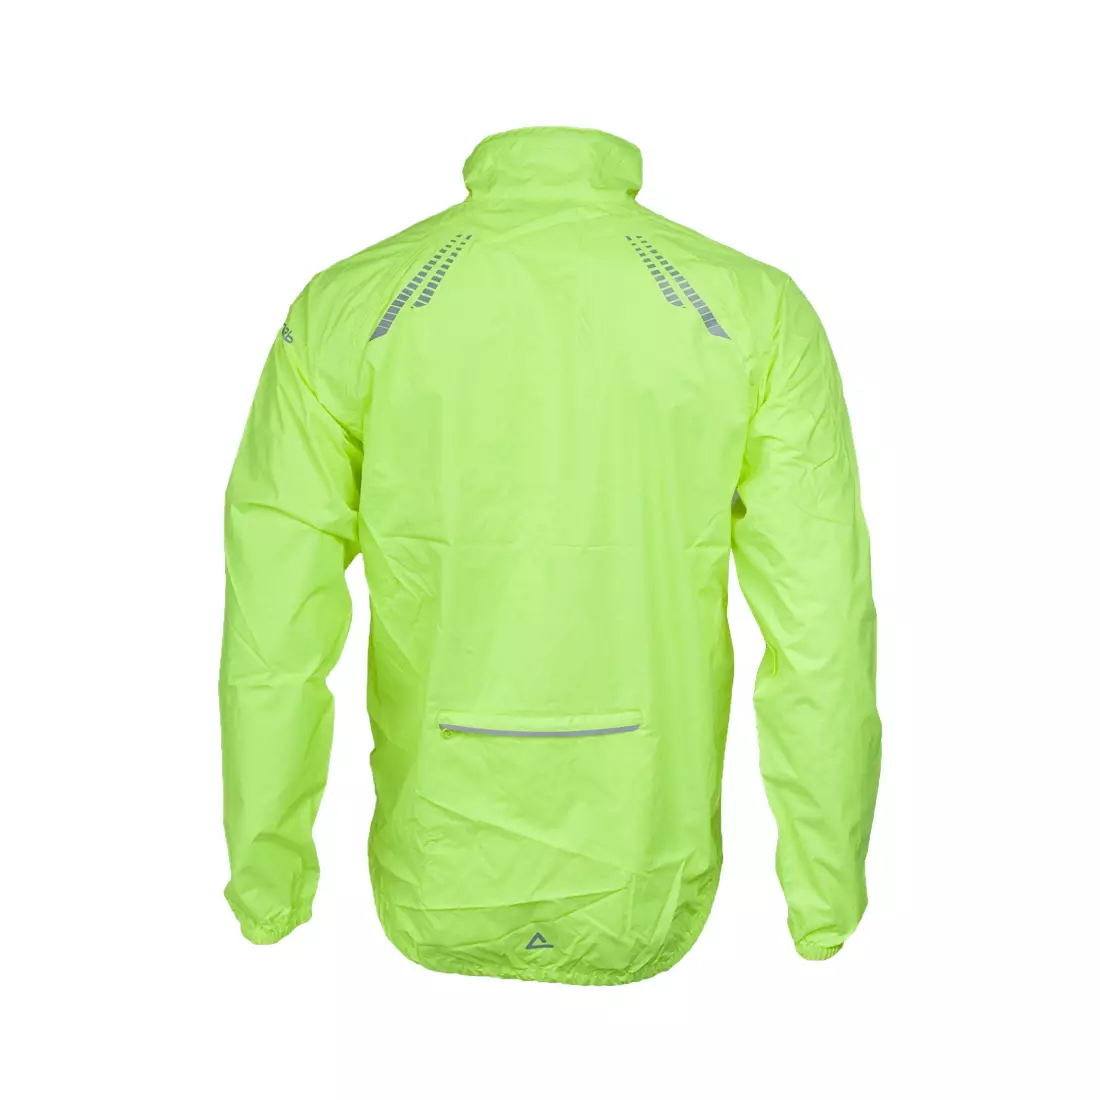 DARE 2B - AQ-LITE JACKET DMW063 - ultralight cycling jacket, color: Fluor